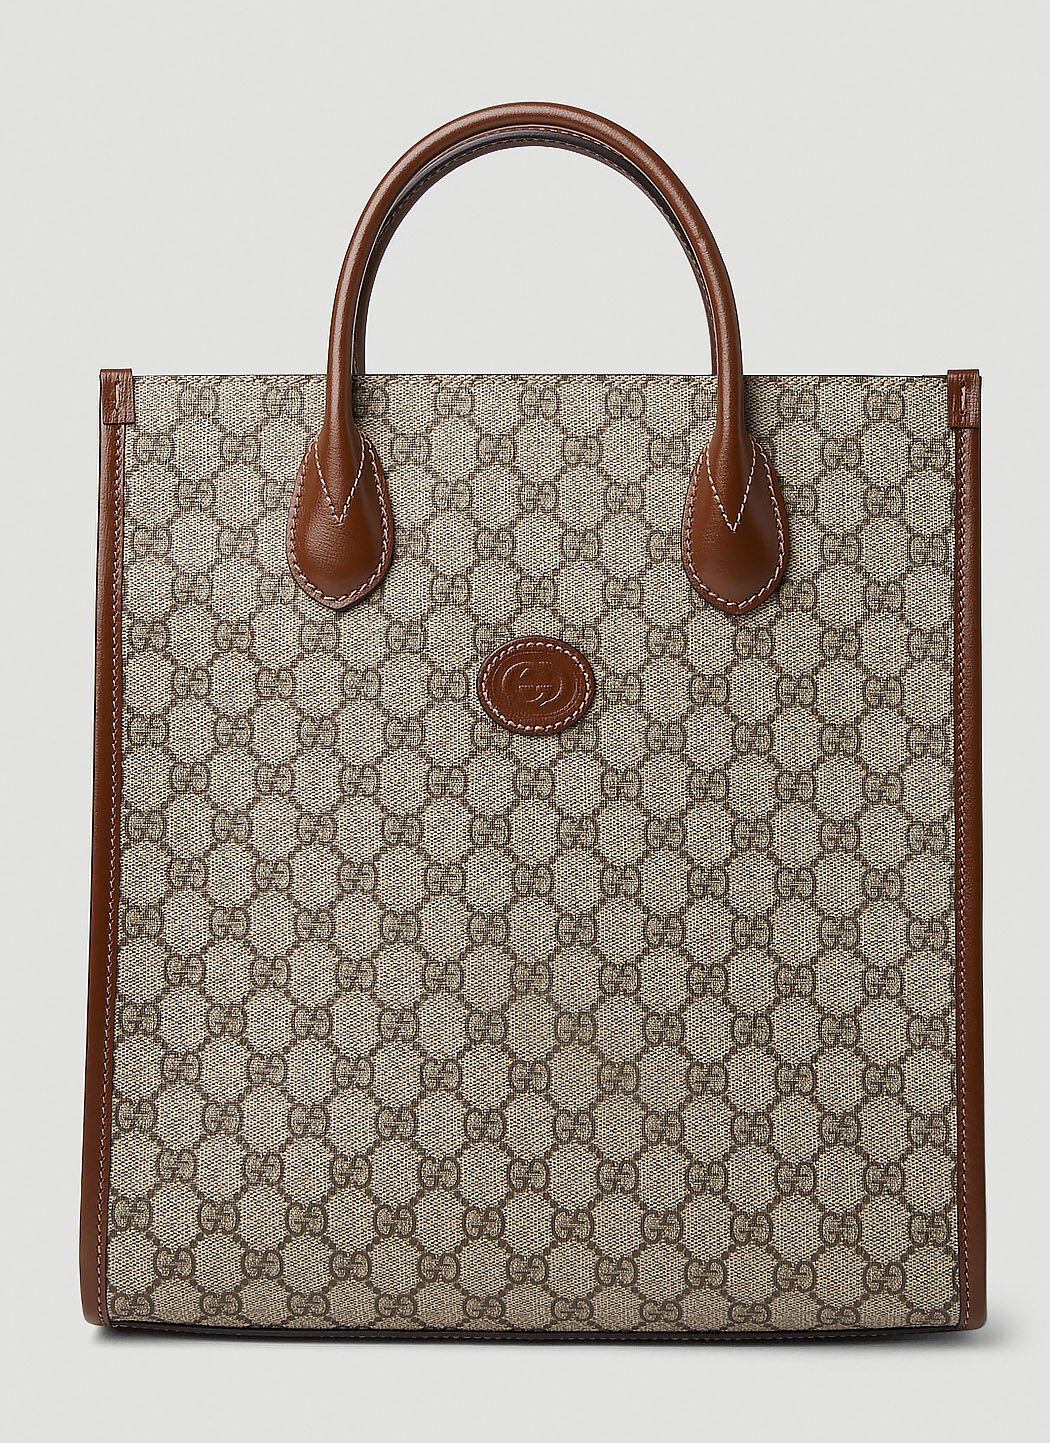 Gucci Interlocking G Medium Tote Bag Beige guc0147157